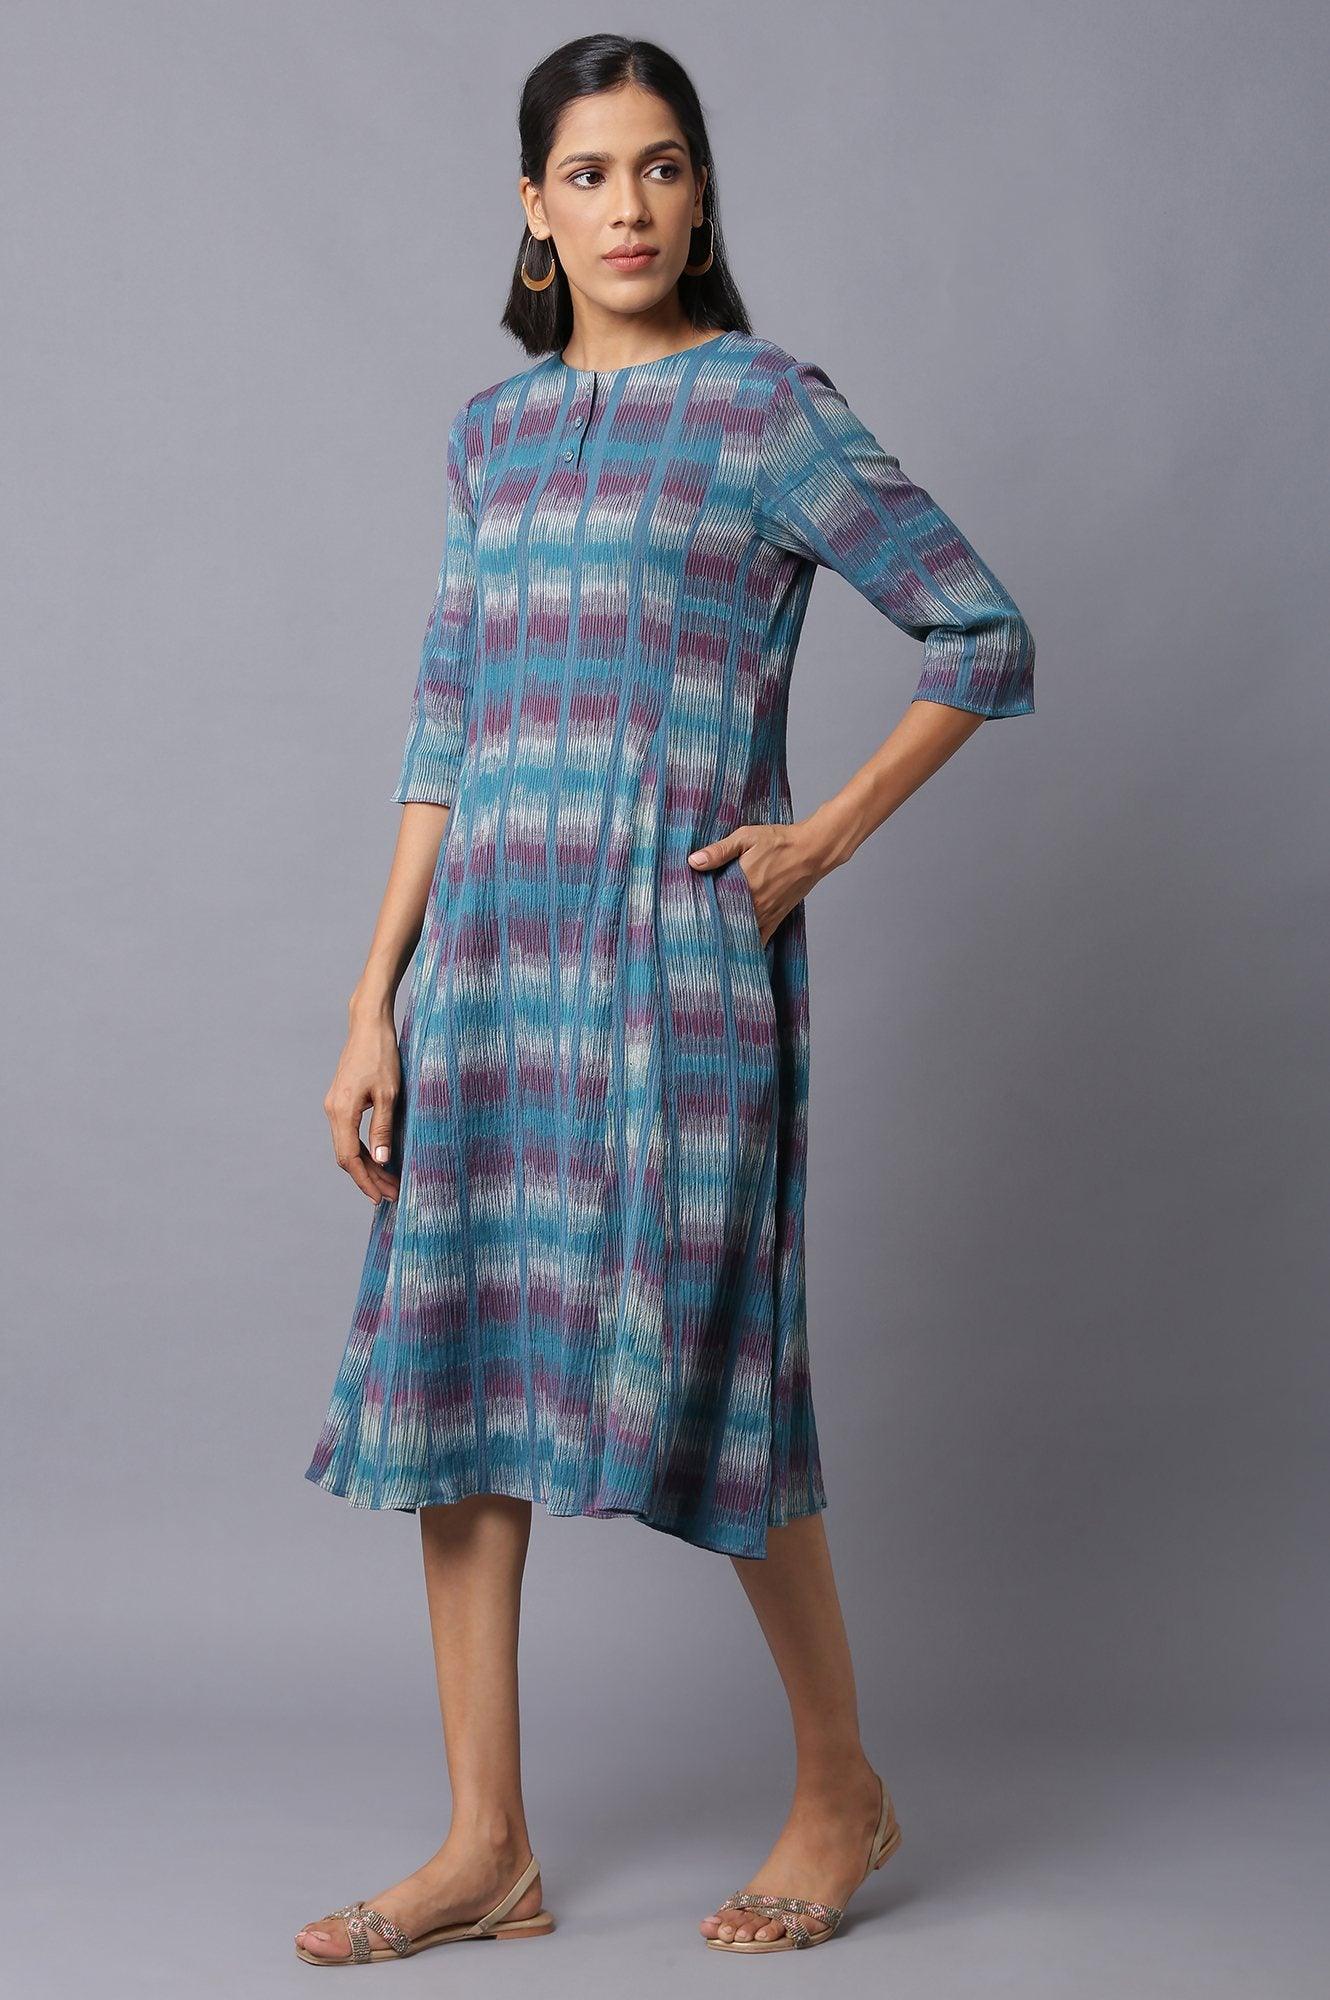 Teal Yarn-Dyed Godet Dress - wforwoman